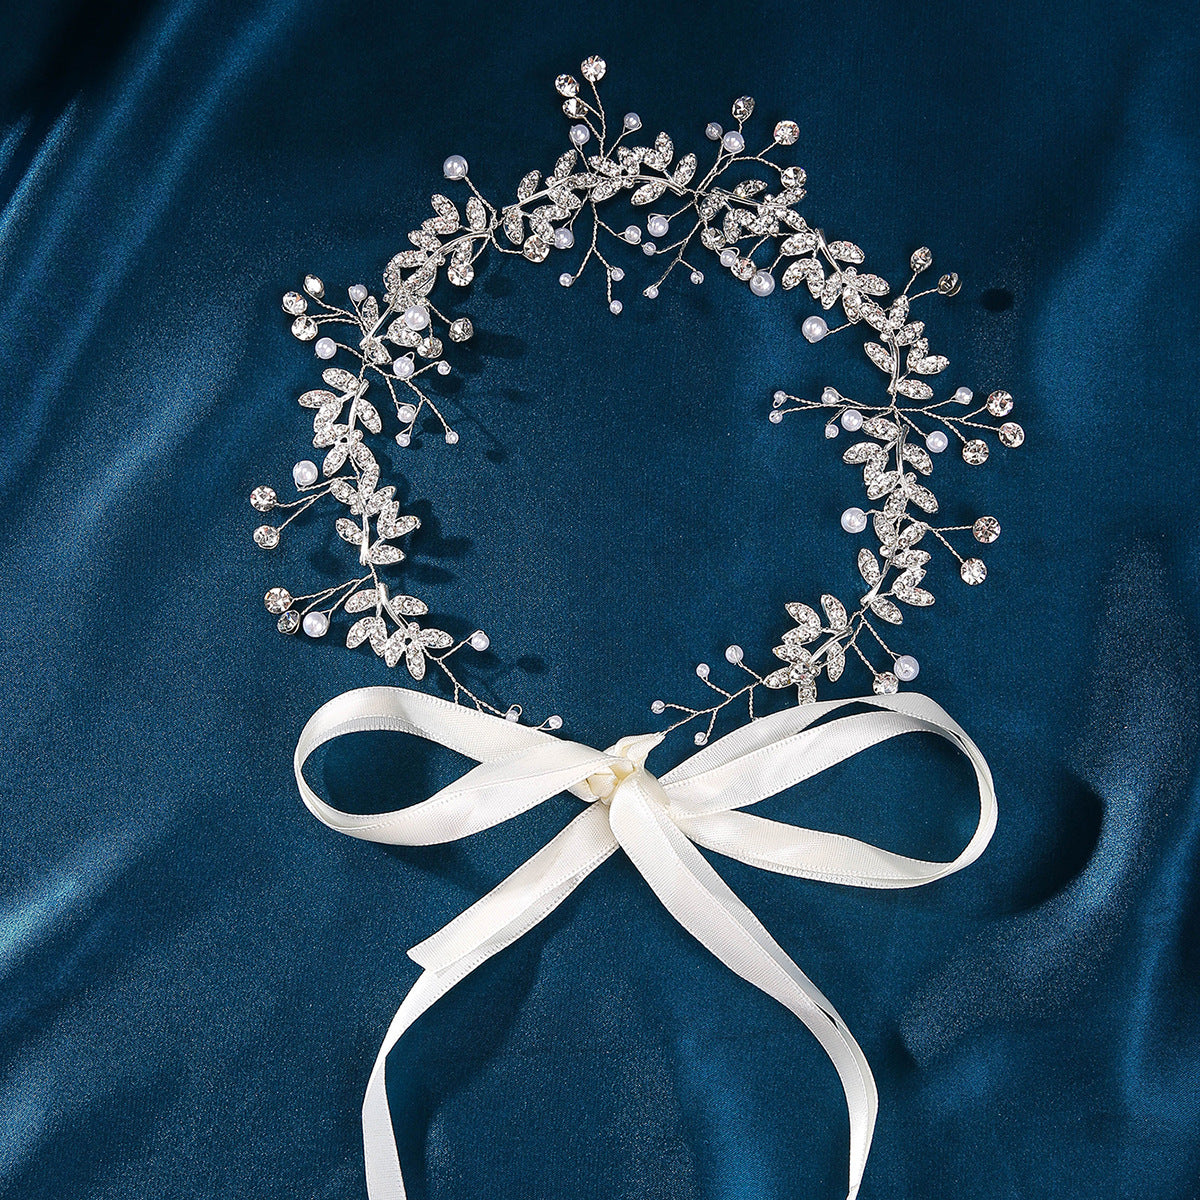 Explosive white handmade Crystal Tiara Bridal garland Hair accessories Pearl headband Headpieces  692378900508